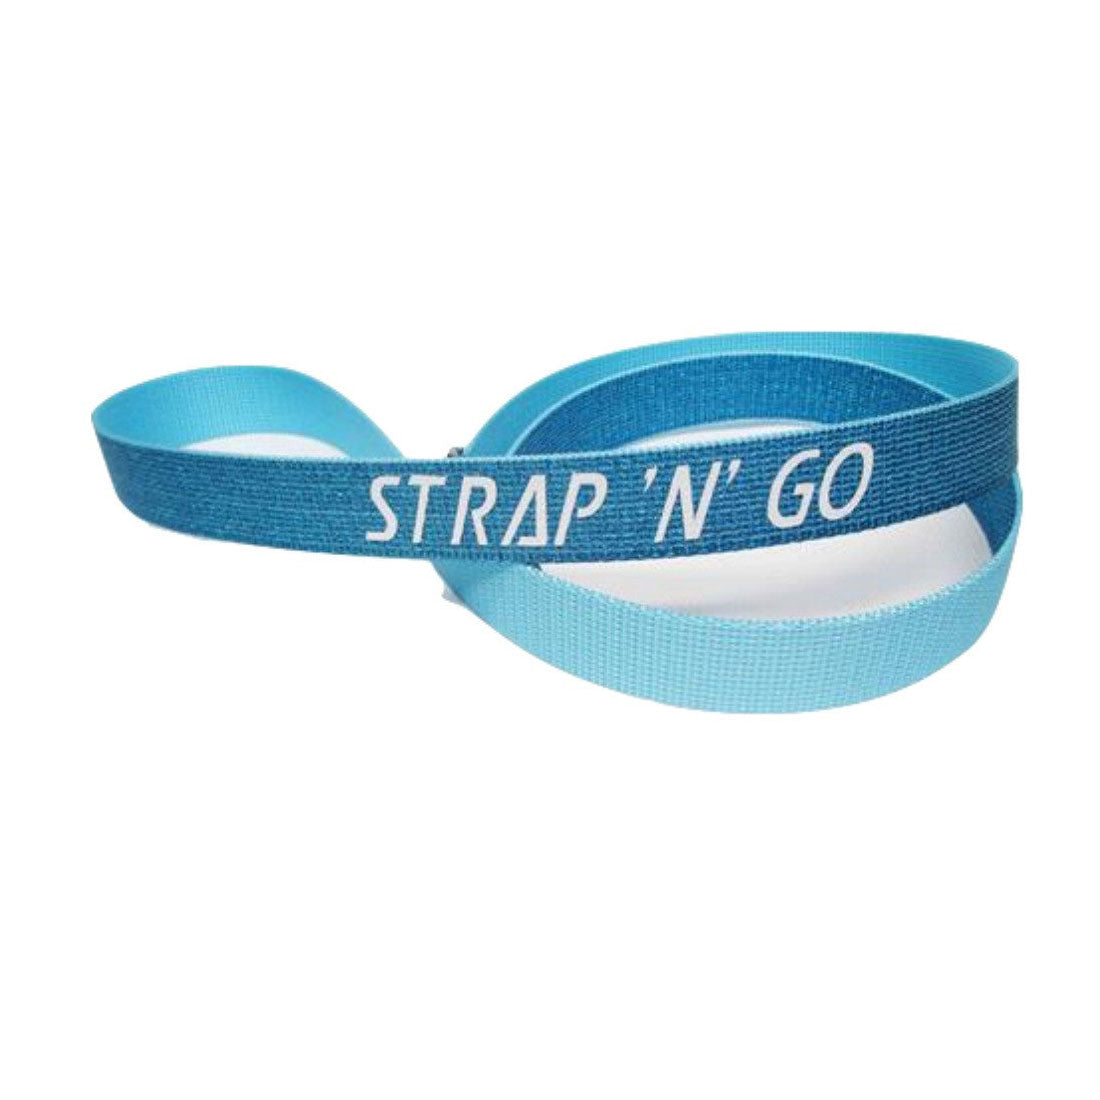 Strap N Go Skate Noose/Leash - Glitter Glitter Sky Blue Roller Skate Accessories